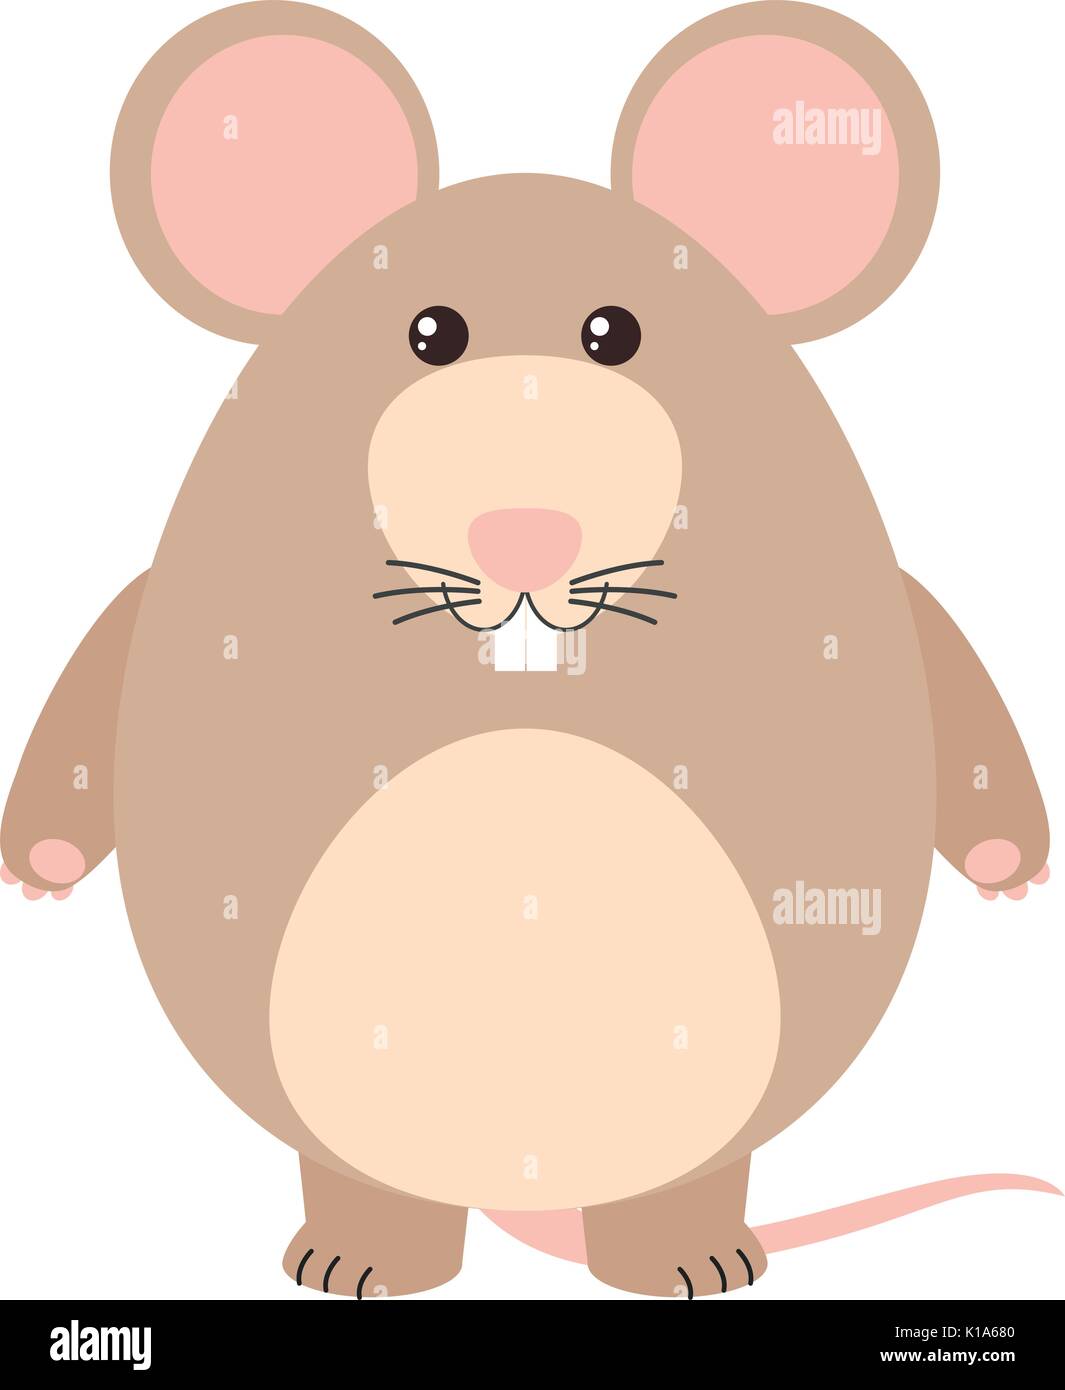 cartoon rat wearing a crown Stock Vector Image & Art - Alamy